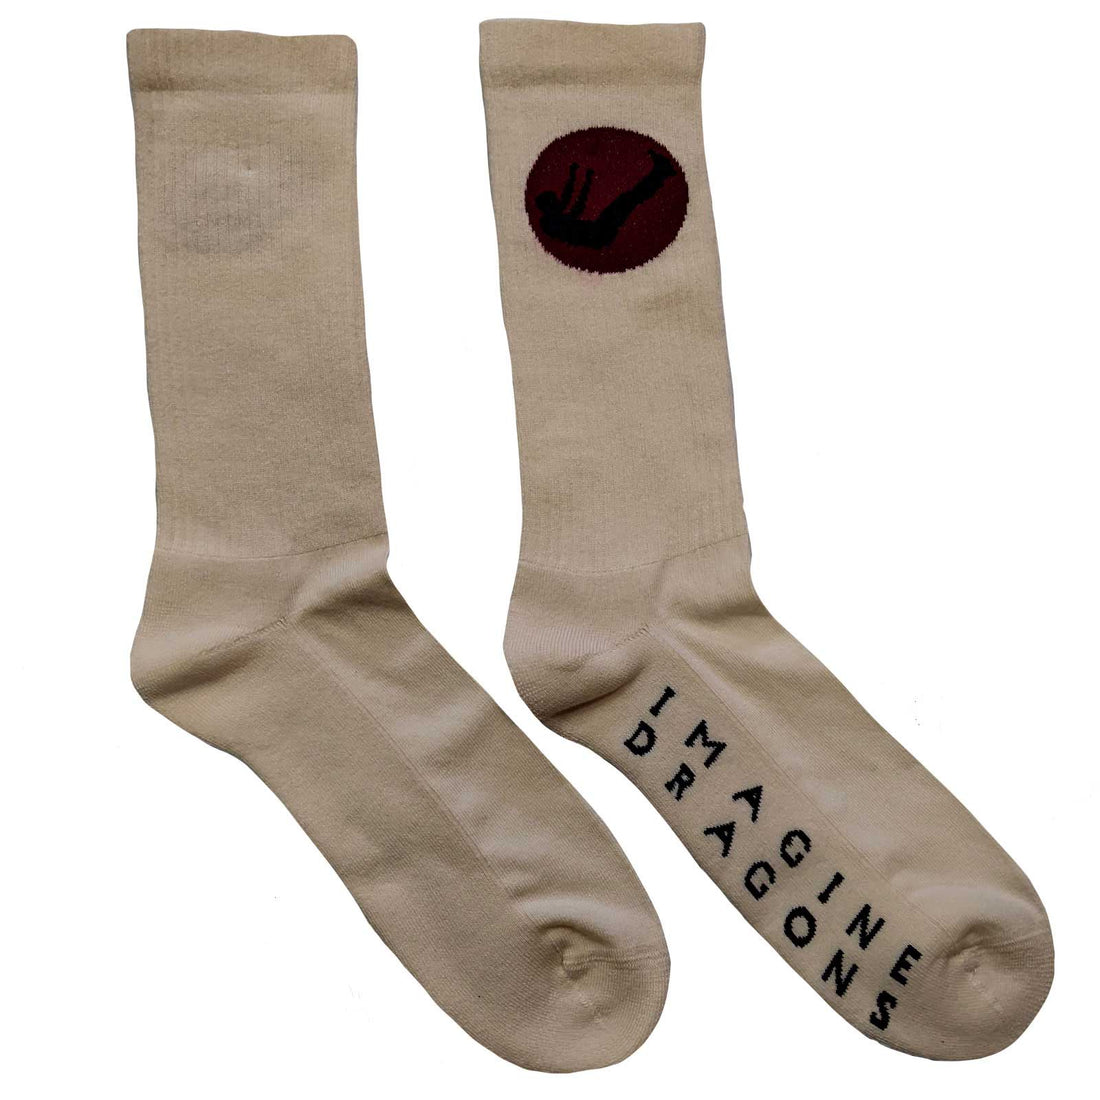 Imagine Dragons Ankle Socks: Mercury (US Size 8 - 10)